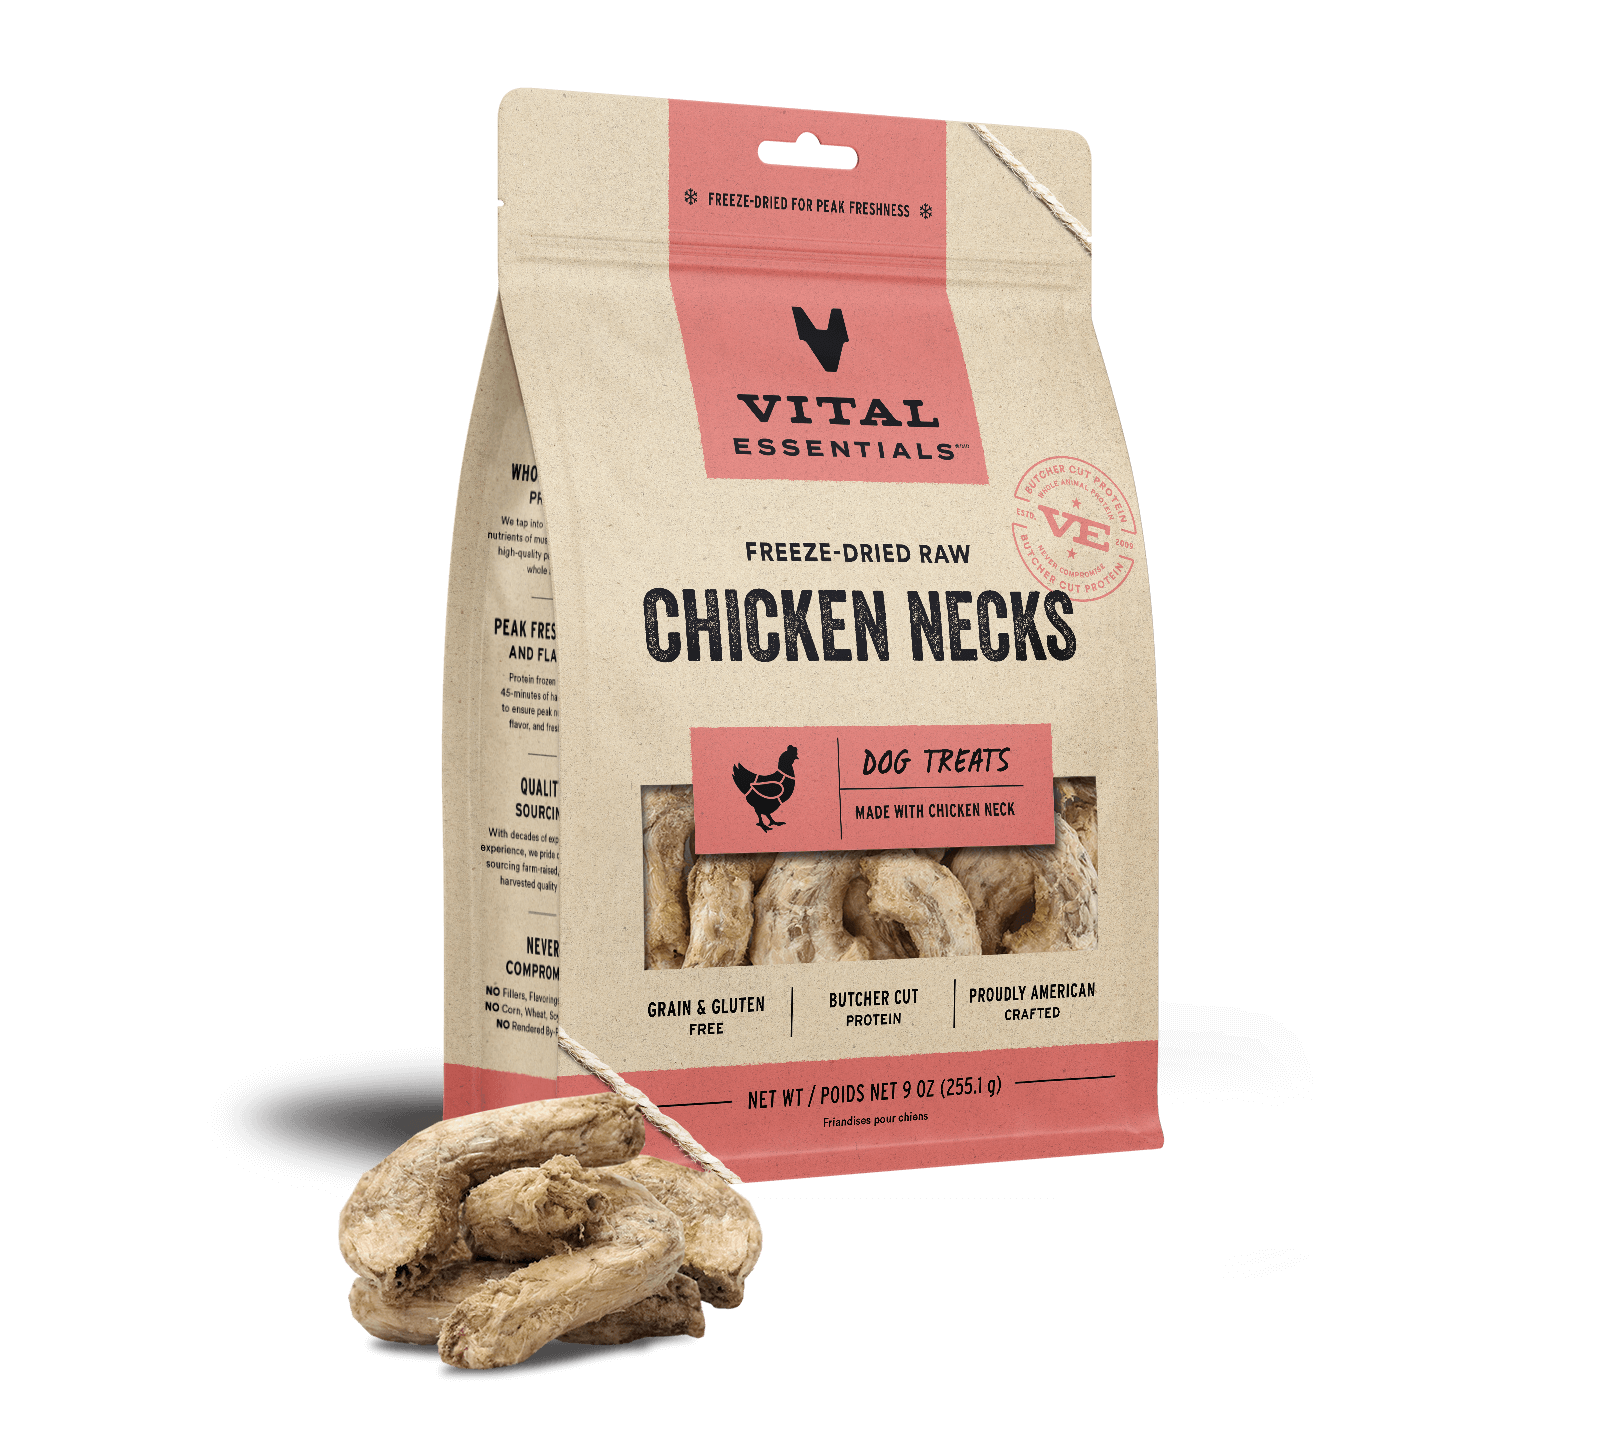 Vital Essentials Freeze-Dried Raw Chicken Necks Dog Treats, 9 oz - Health/First Aid